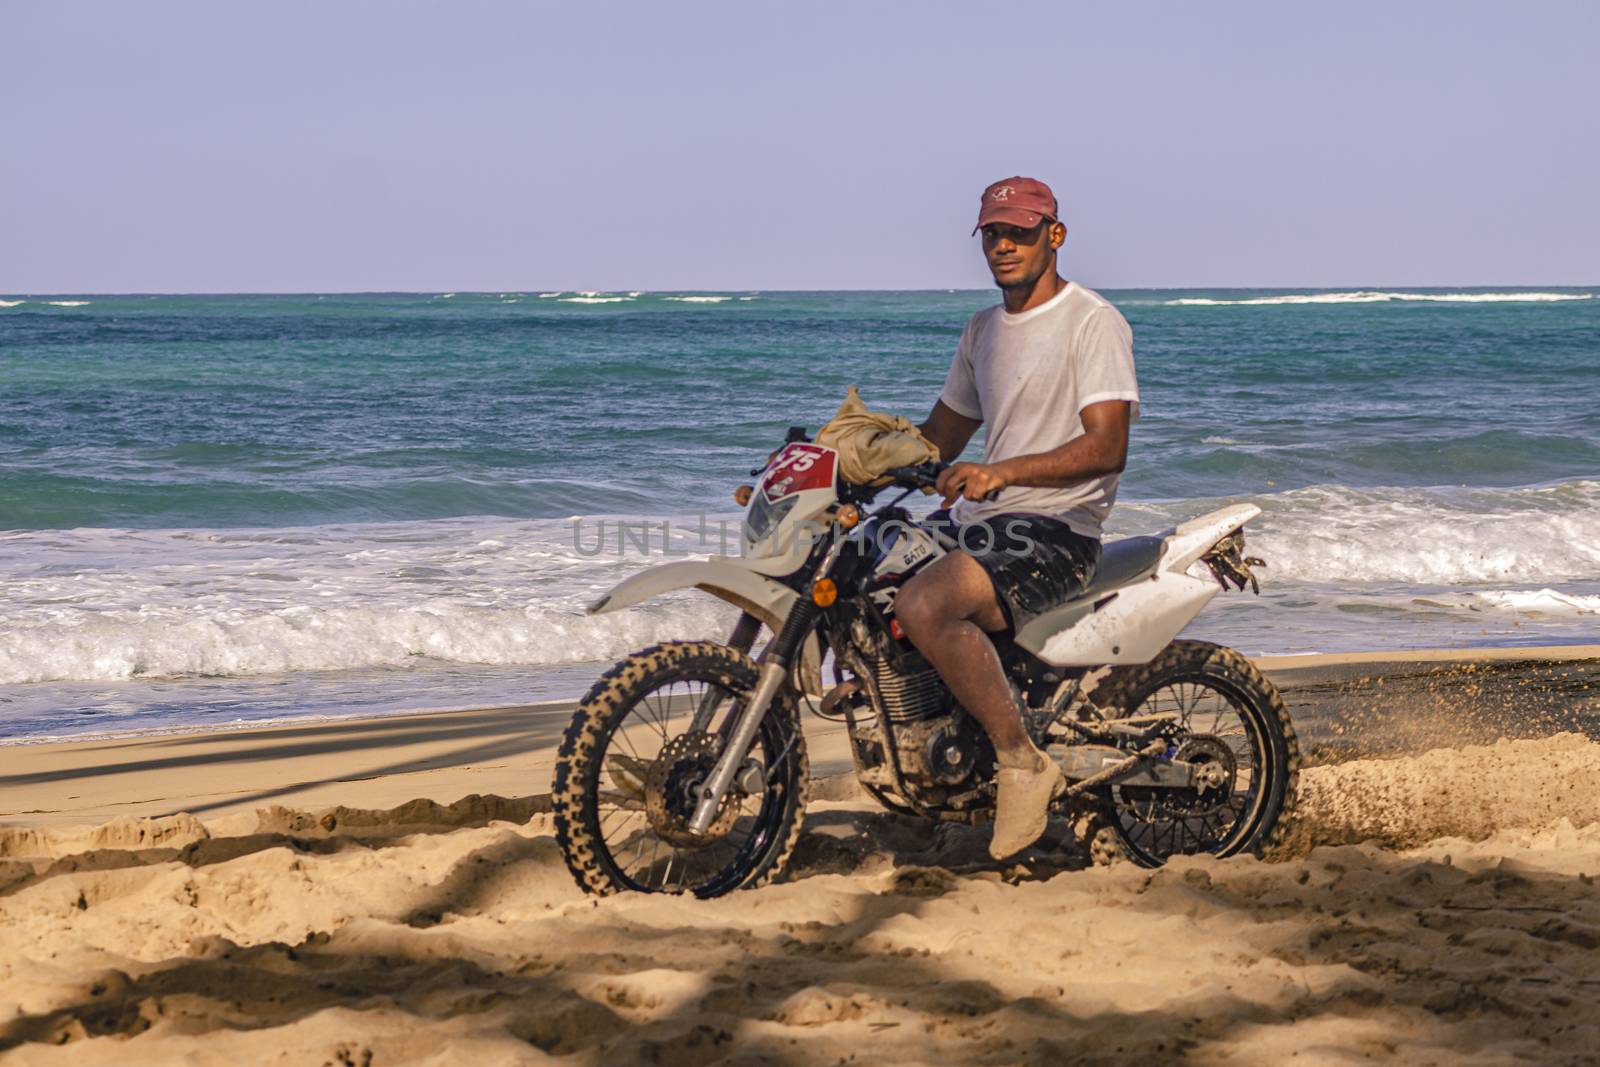 Biker on the Caribbean beach 4 by pippocarlot